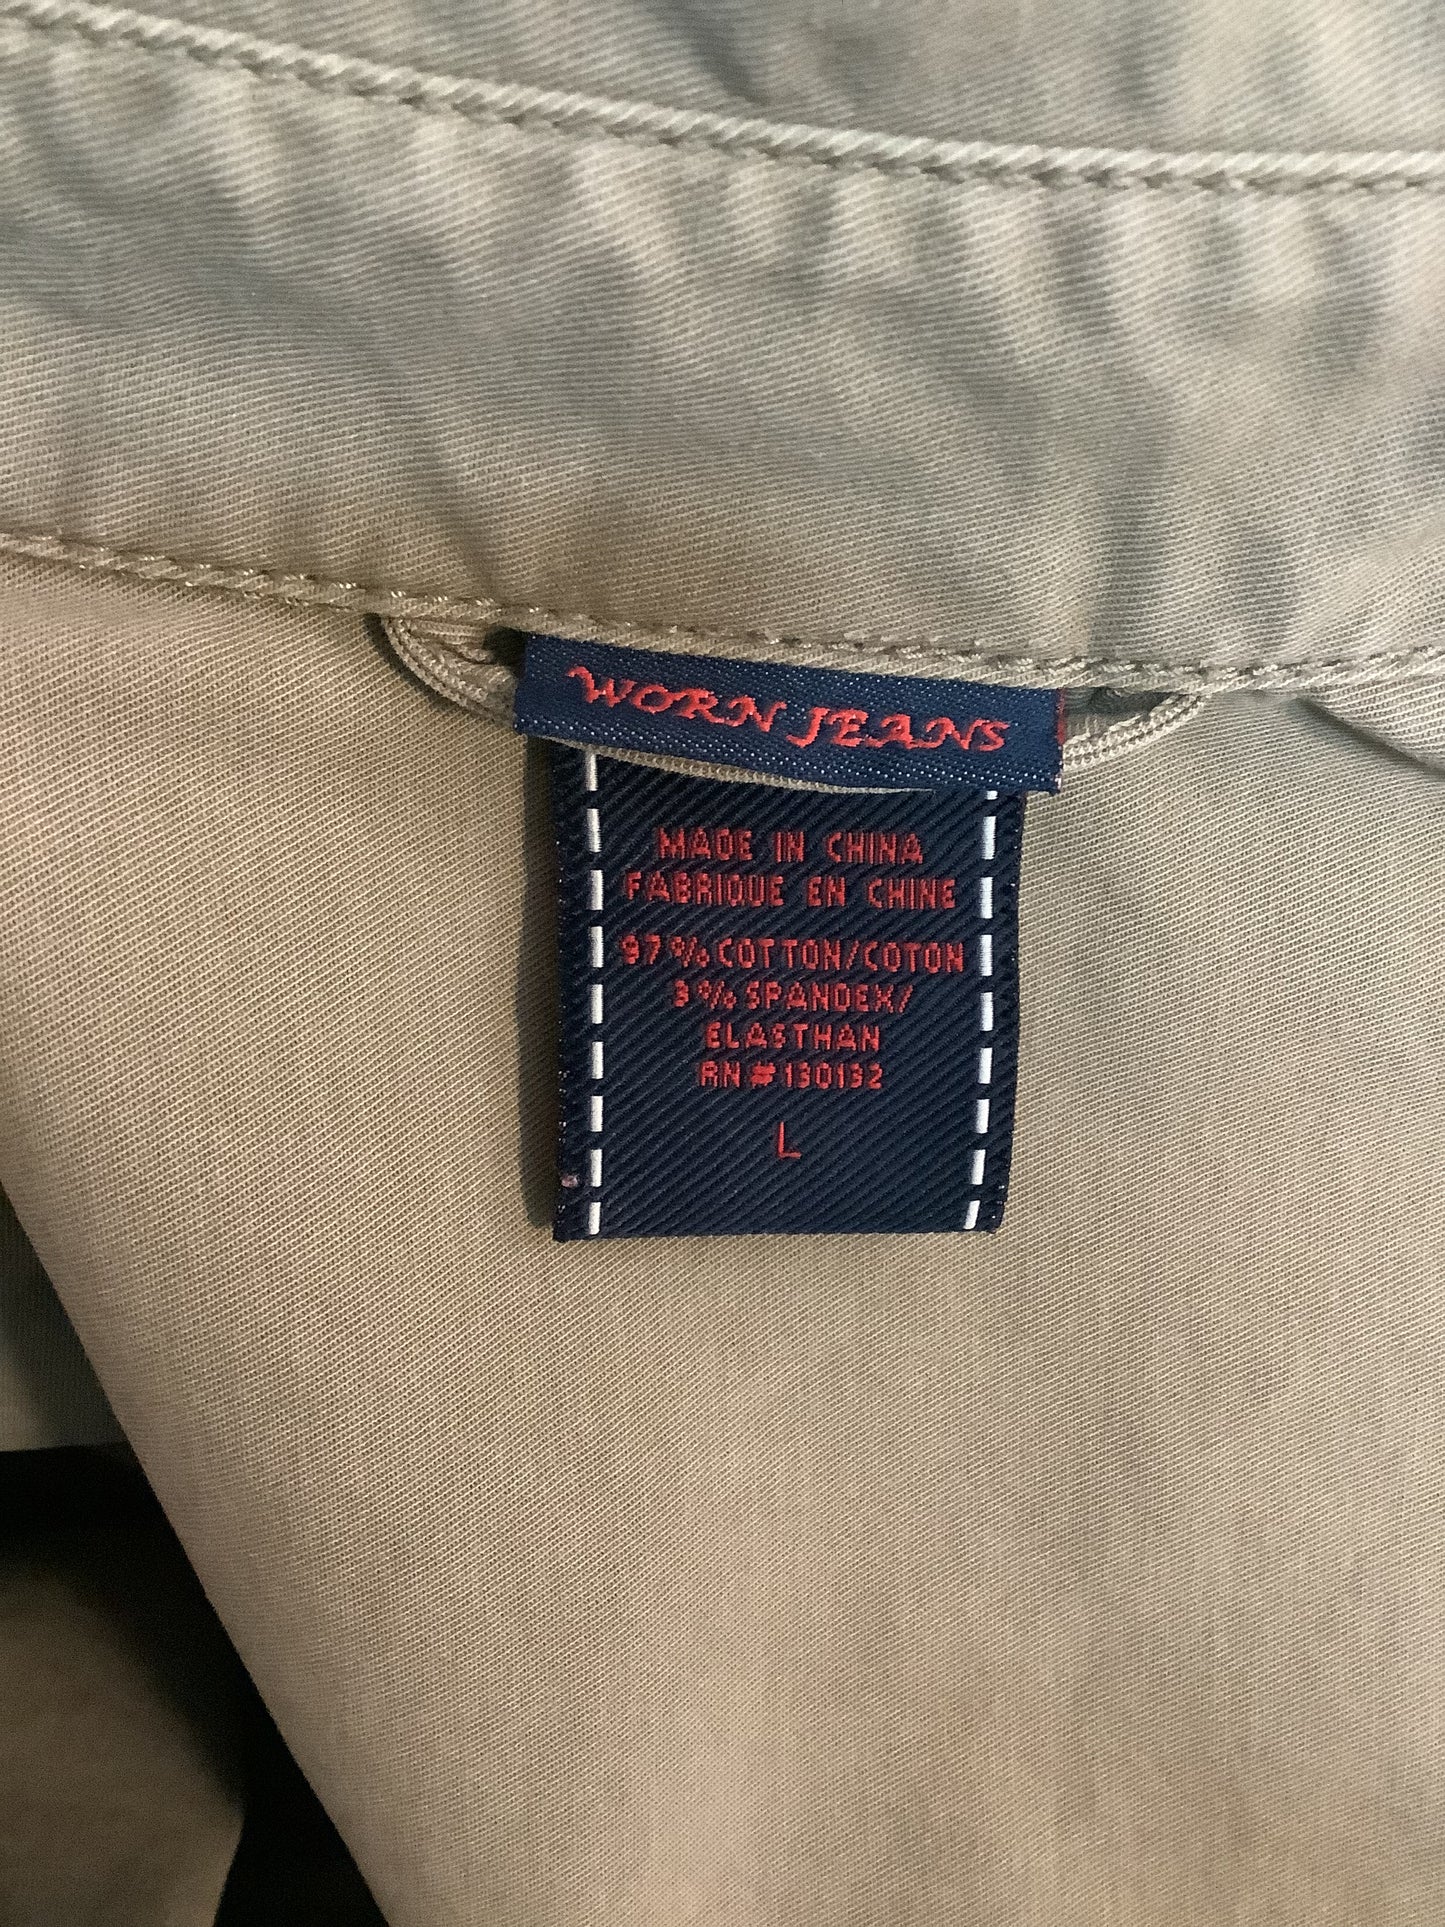 Worn Jeans Safari Style Jacket Sz Large